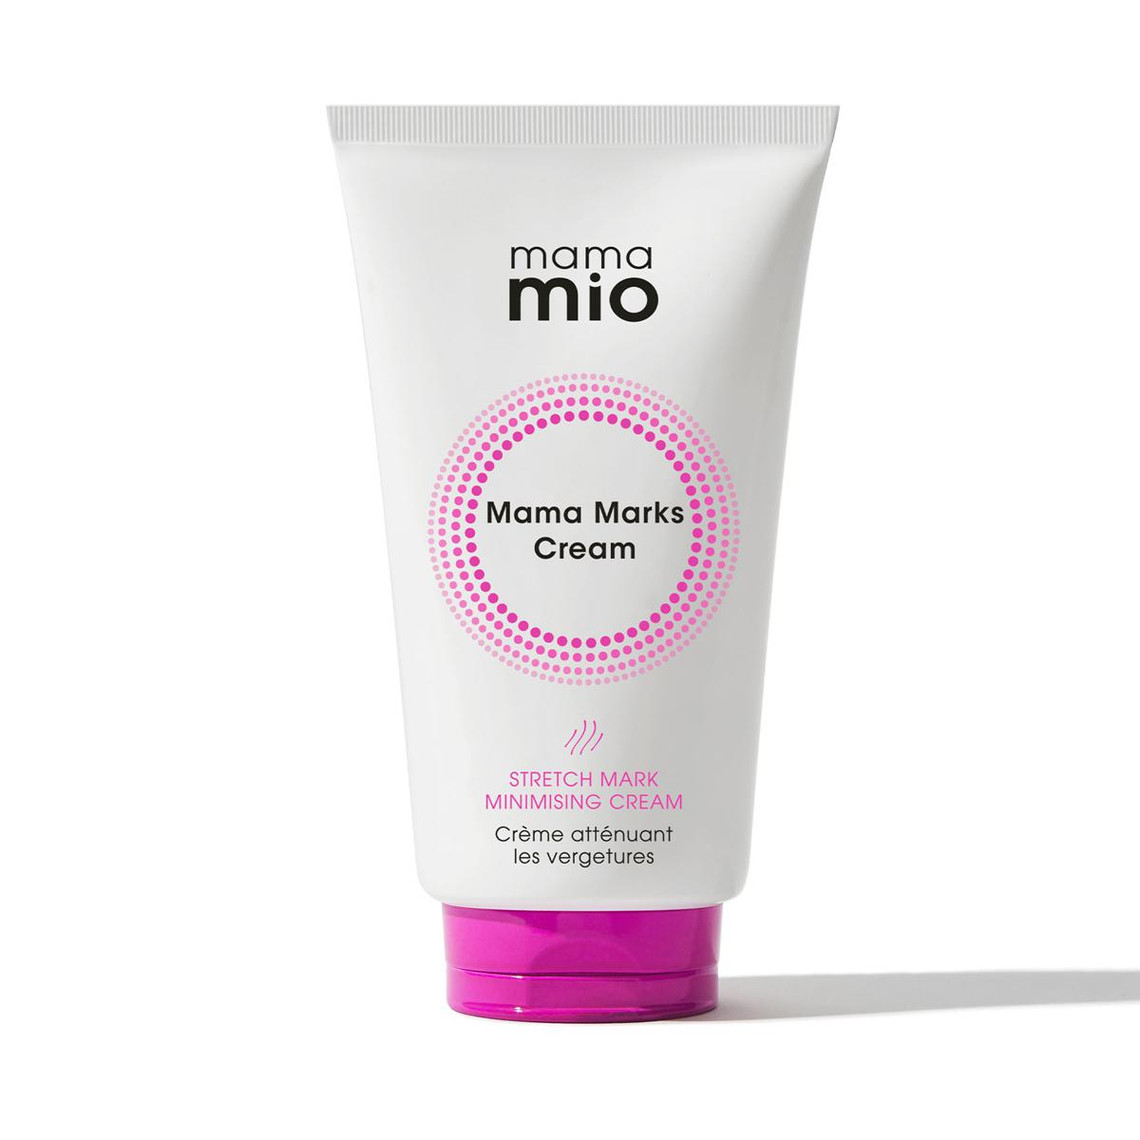 Crème anti vergetures - Mama Mio Mama Marks Cream